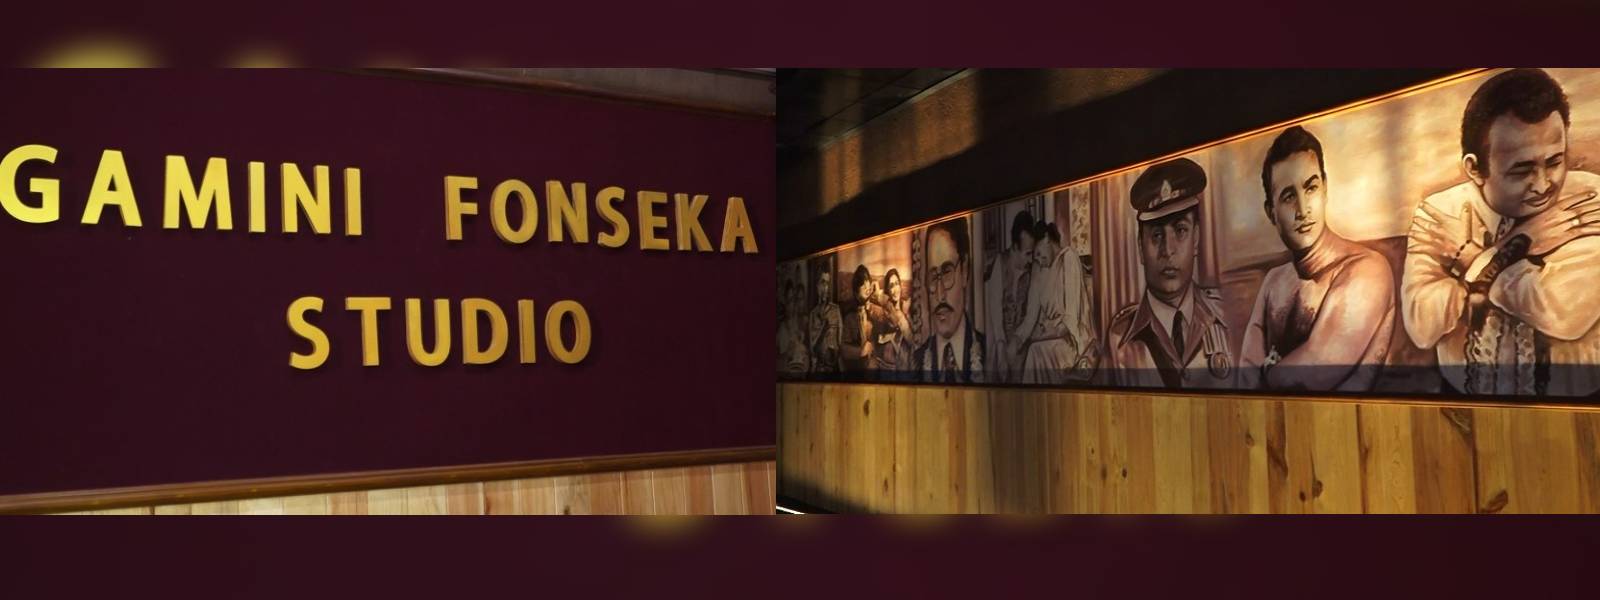 The Gamini Fonseka Studio – Stein Studios honours legend